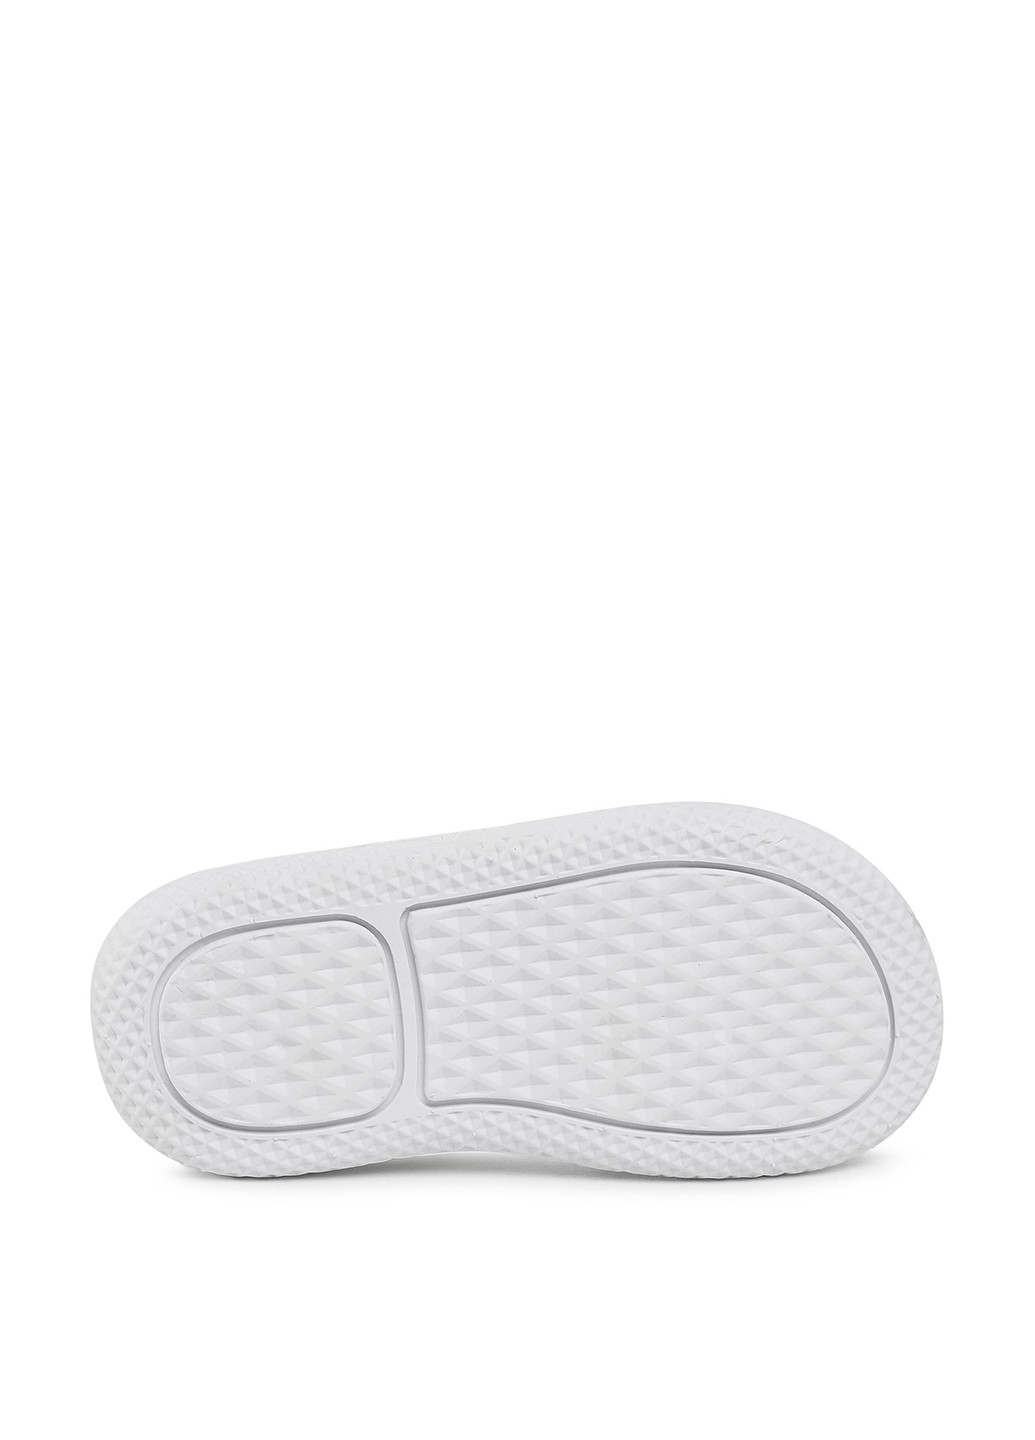 Белые кэжуал сандалі cp76-21077 Sprandi на липучке